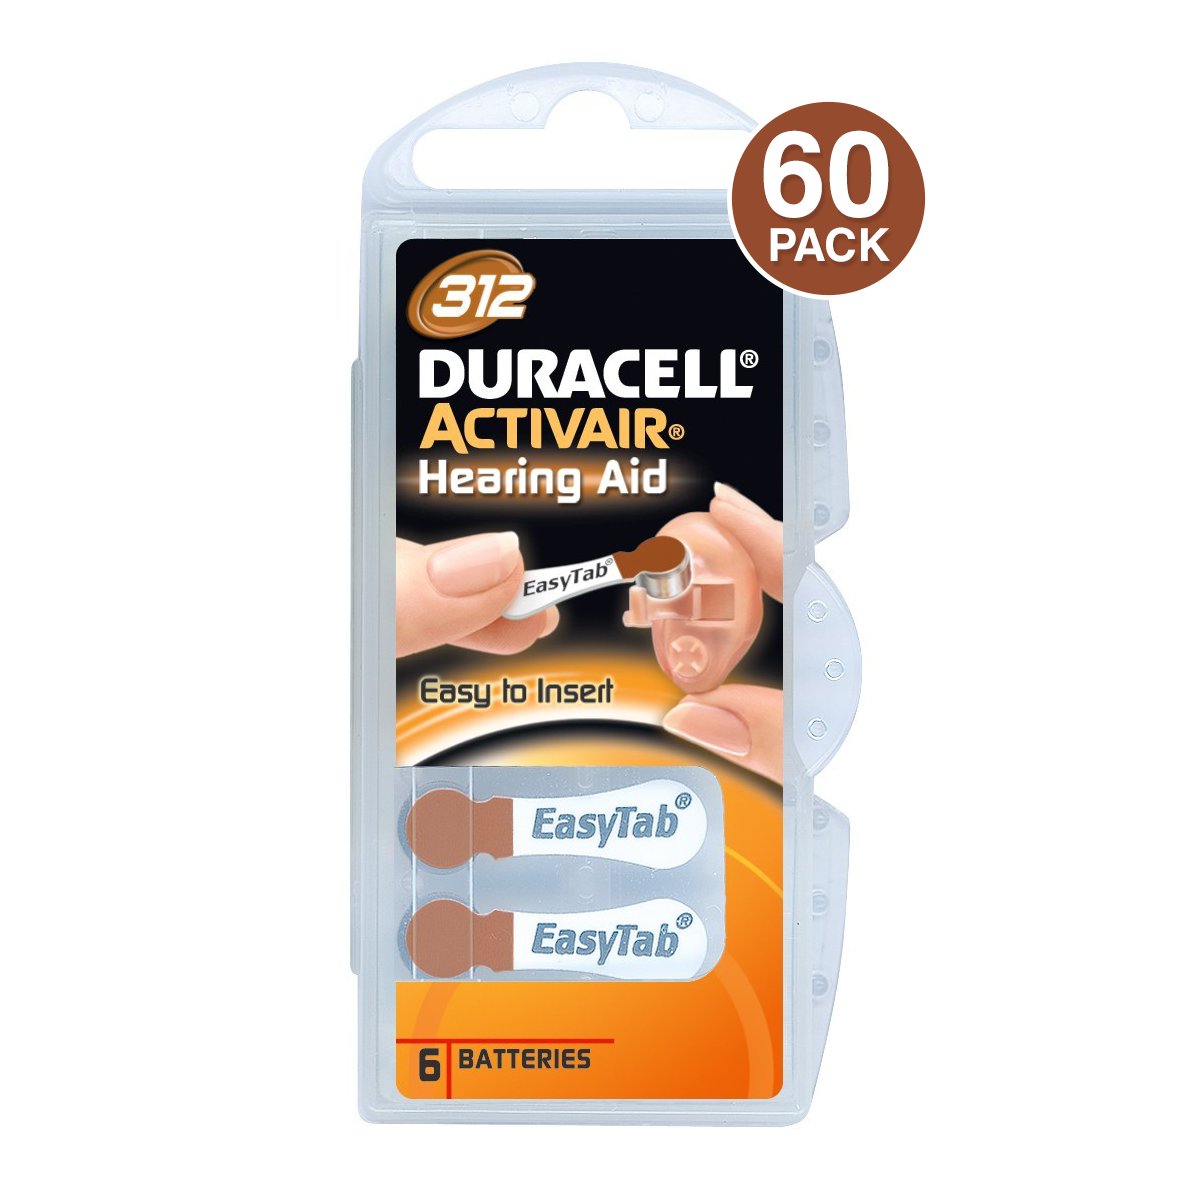 Duracell Activair 312 Hearing Aid Battery 60 Pcs - Mercury Free